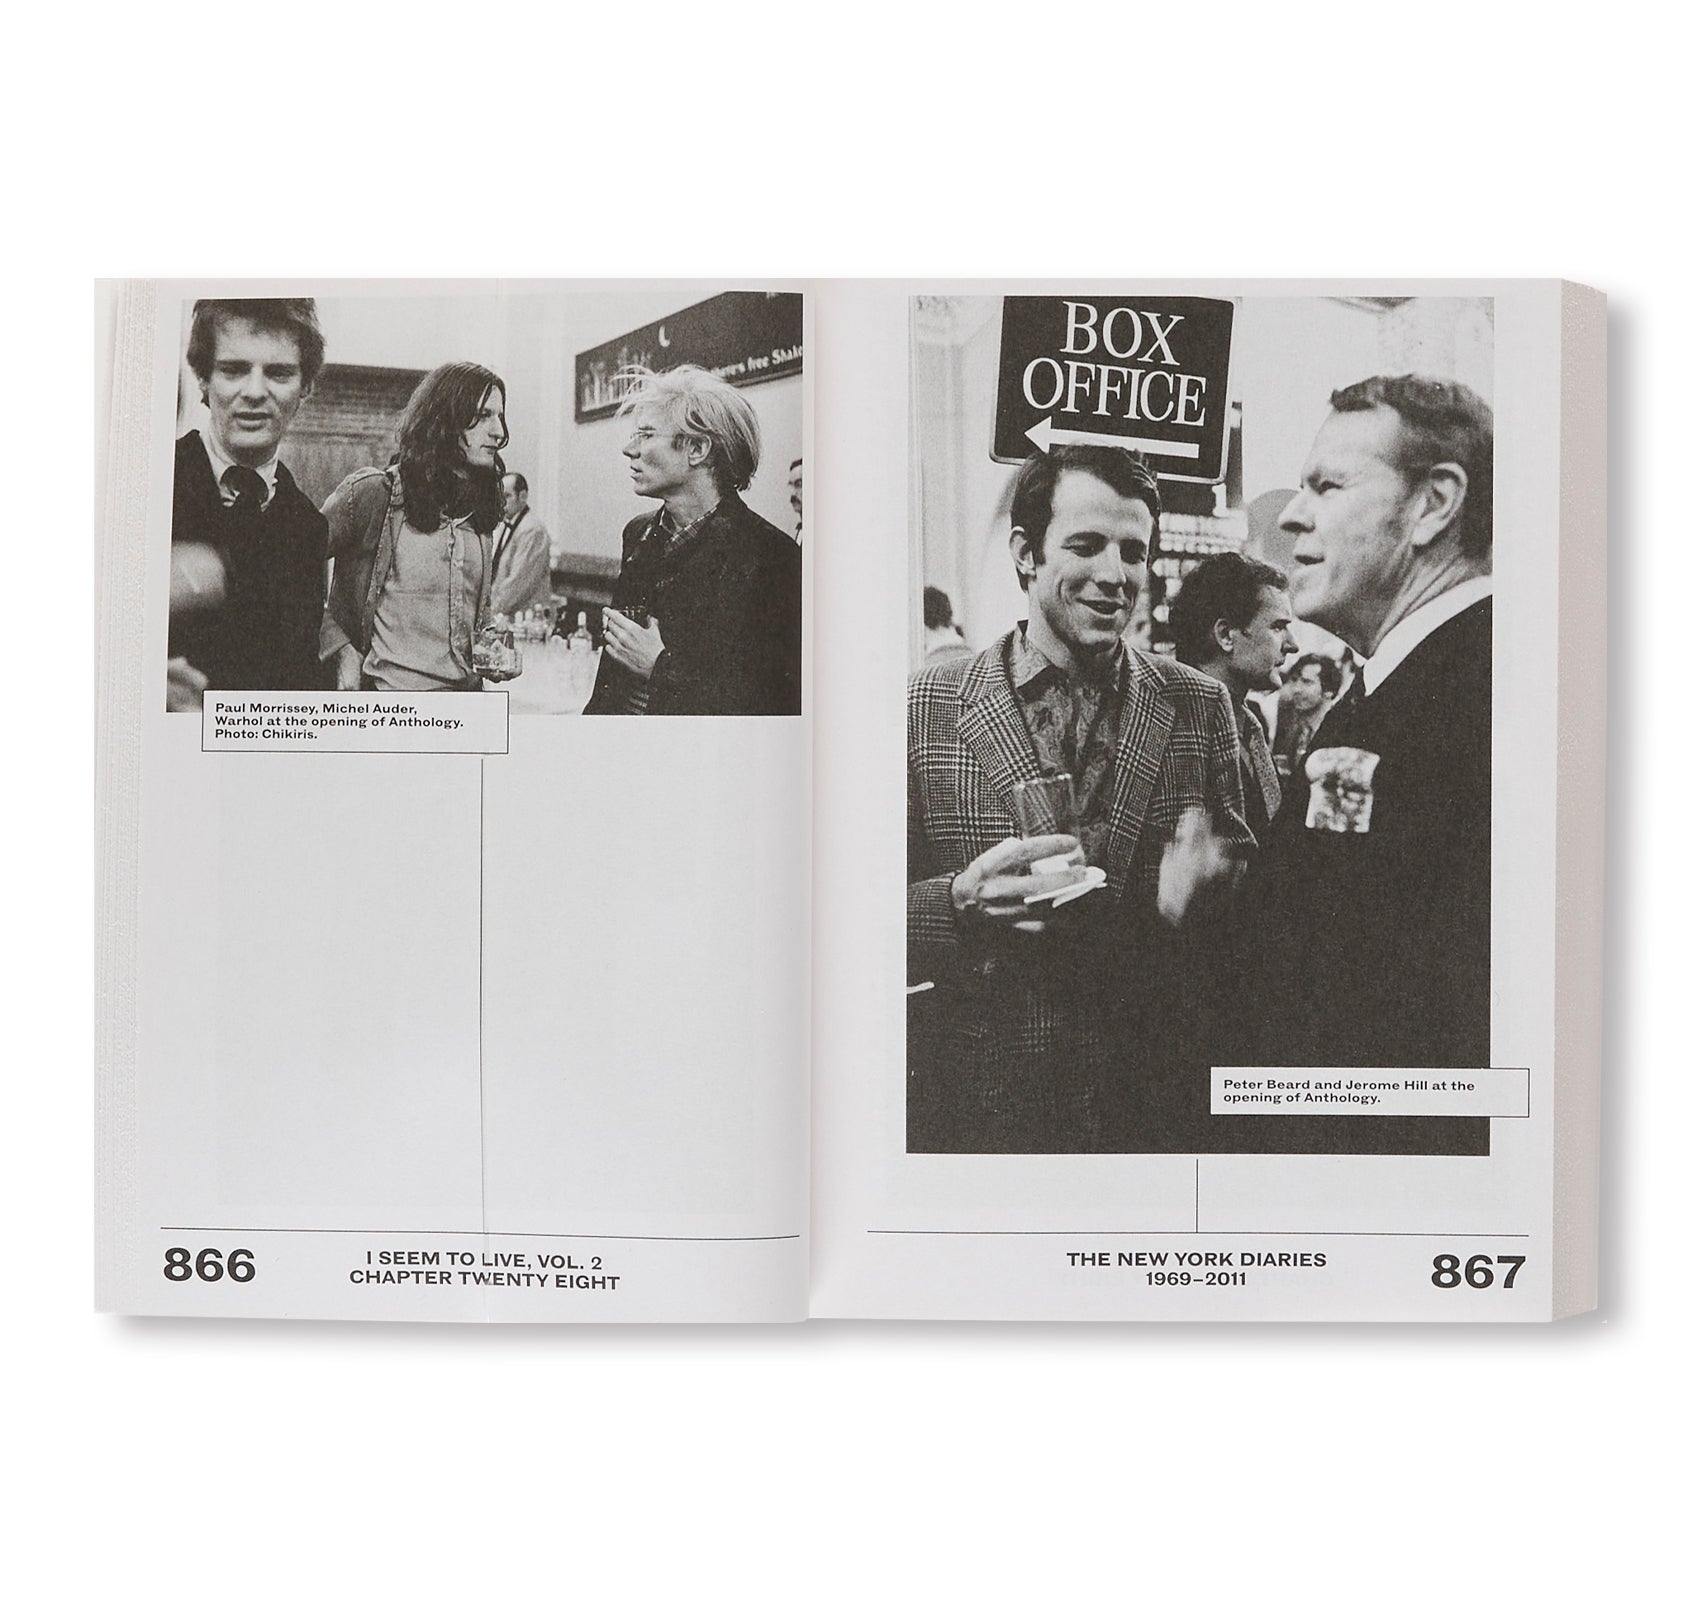 I SEEM TO LIVE - The New York Diaries. vol. 2, 1969-2011 by Jonas Mekas